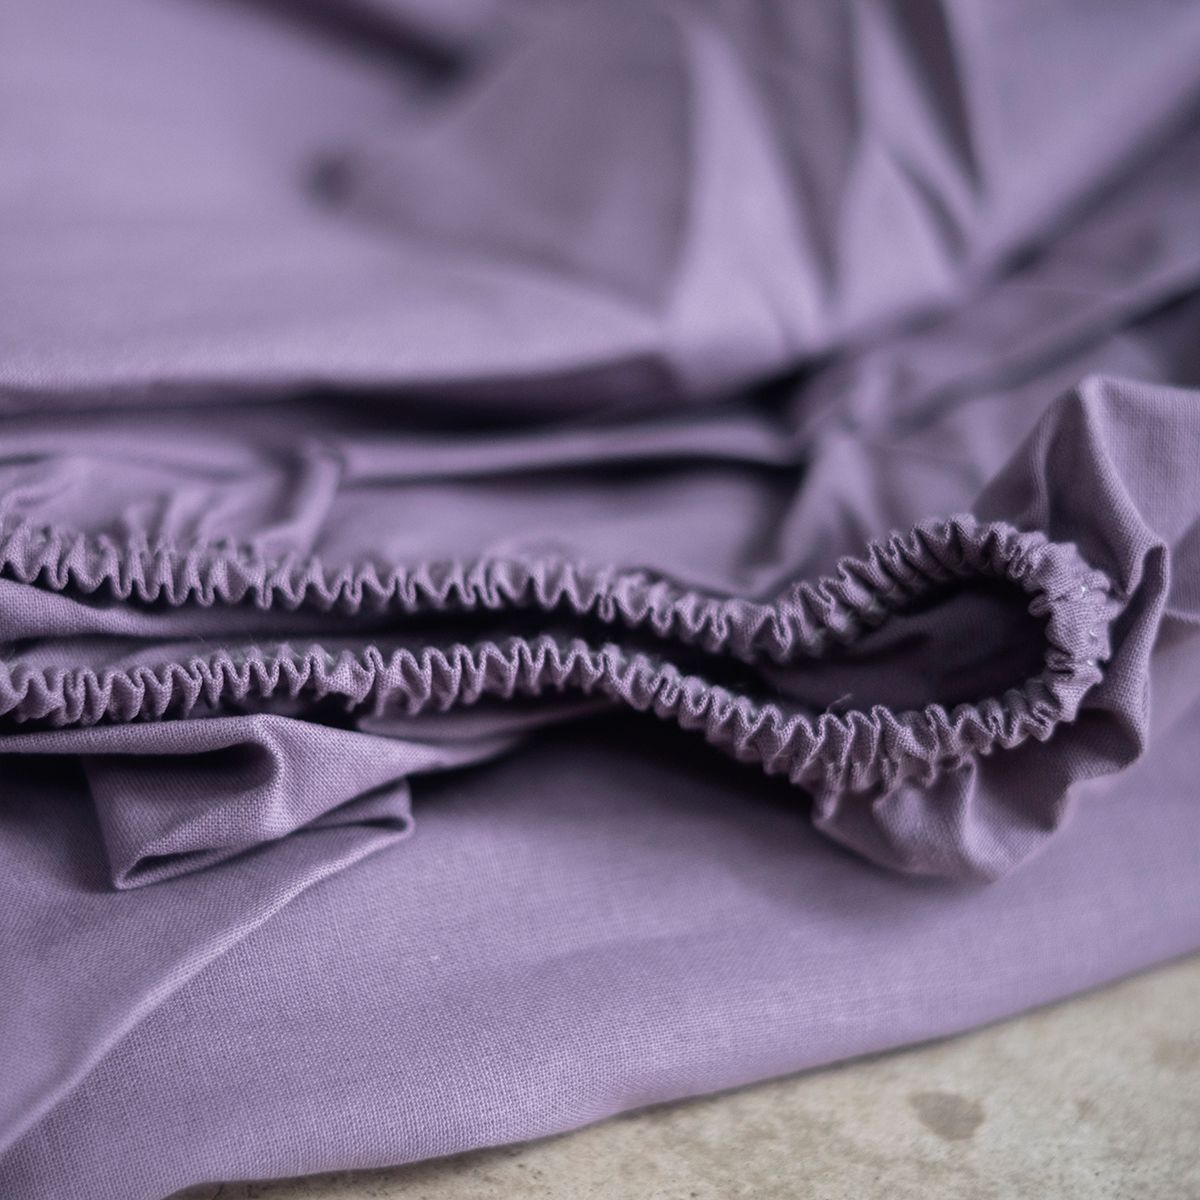  [ORDER] COTONEA Drap cotton bọc nệm dệt kiểu linen màu lilac 